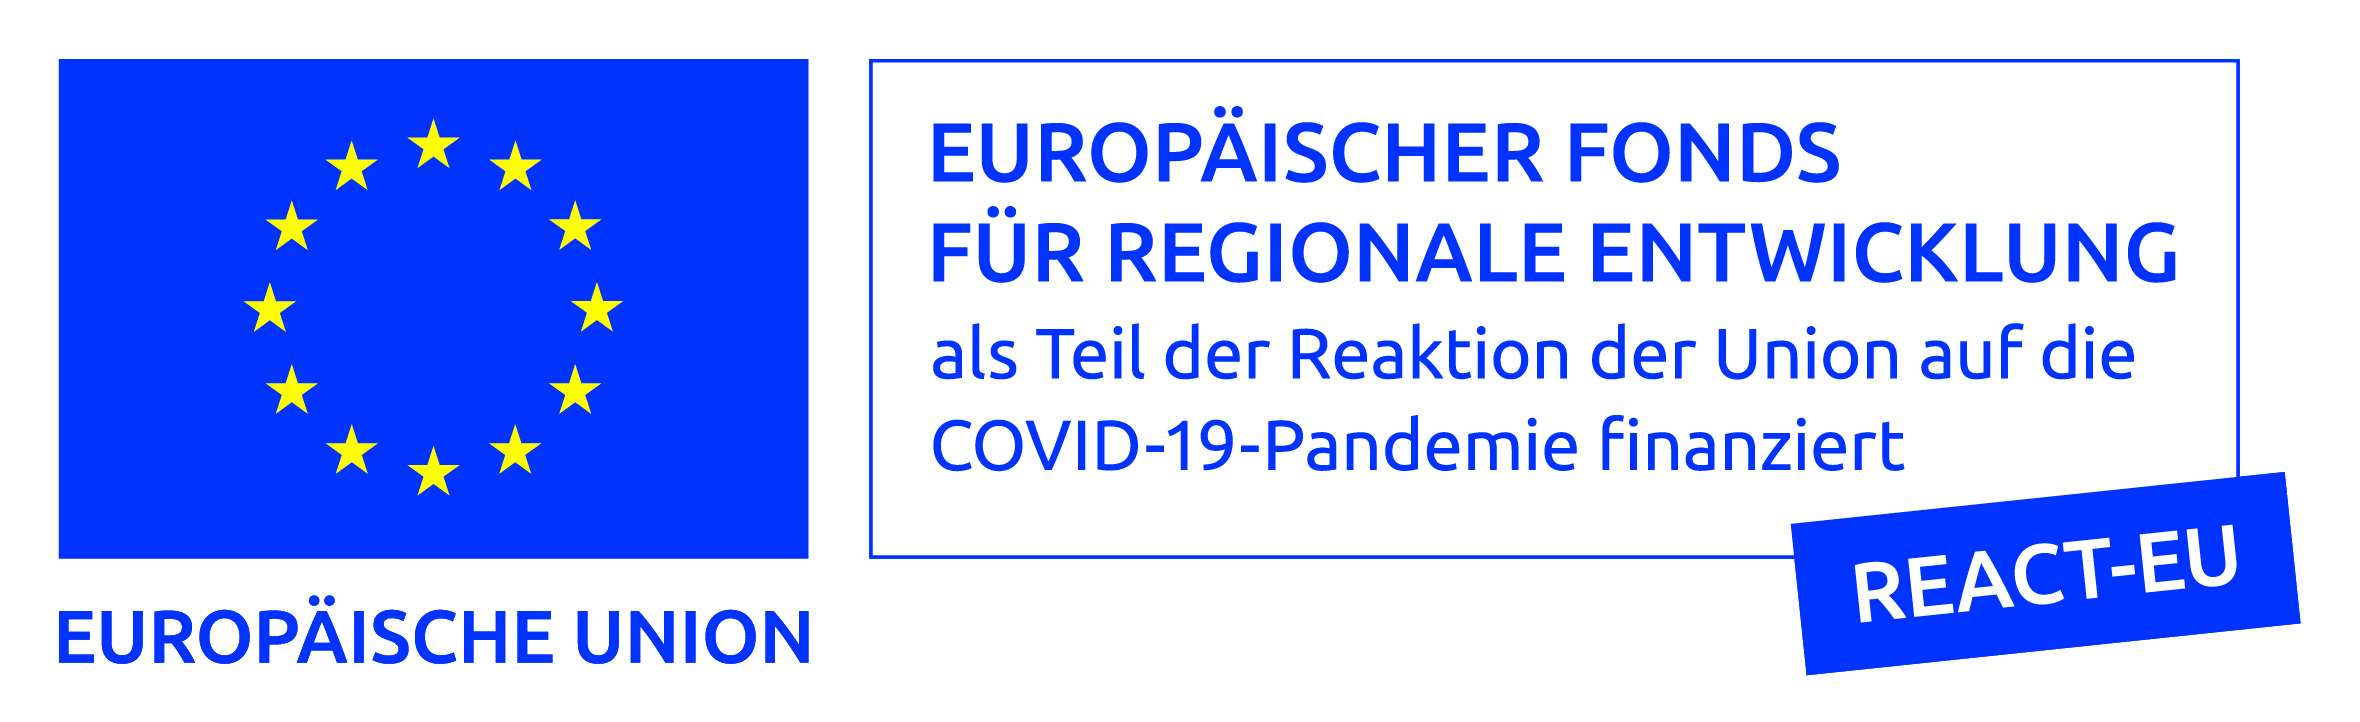 https://2014-2020.efre-bayern.de/fileadmin/user_upload/efre/2014-2020_Entwurf/REACT-EU/REACT-EU-Foerderhinweis_cmyk_Druck.jpg